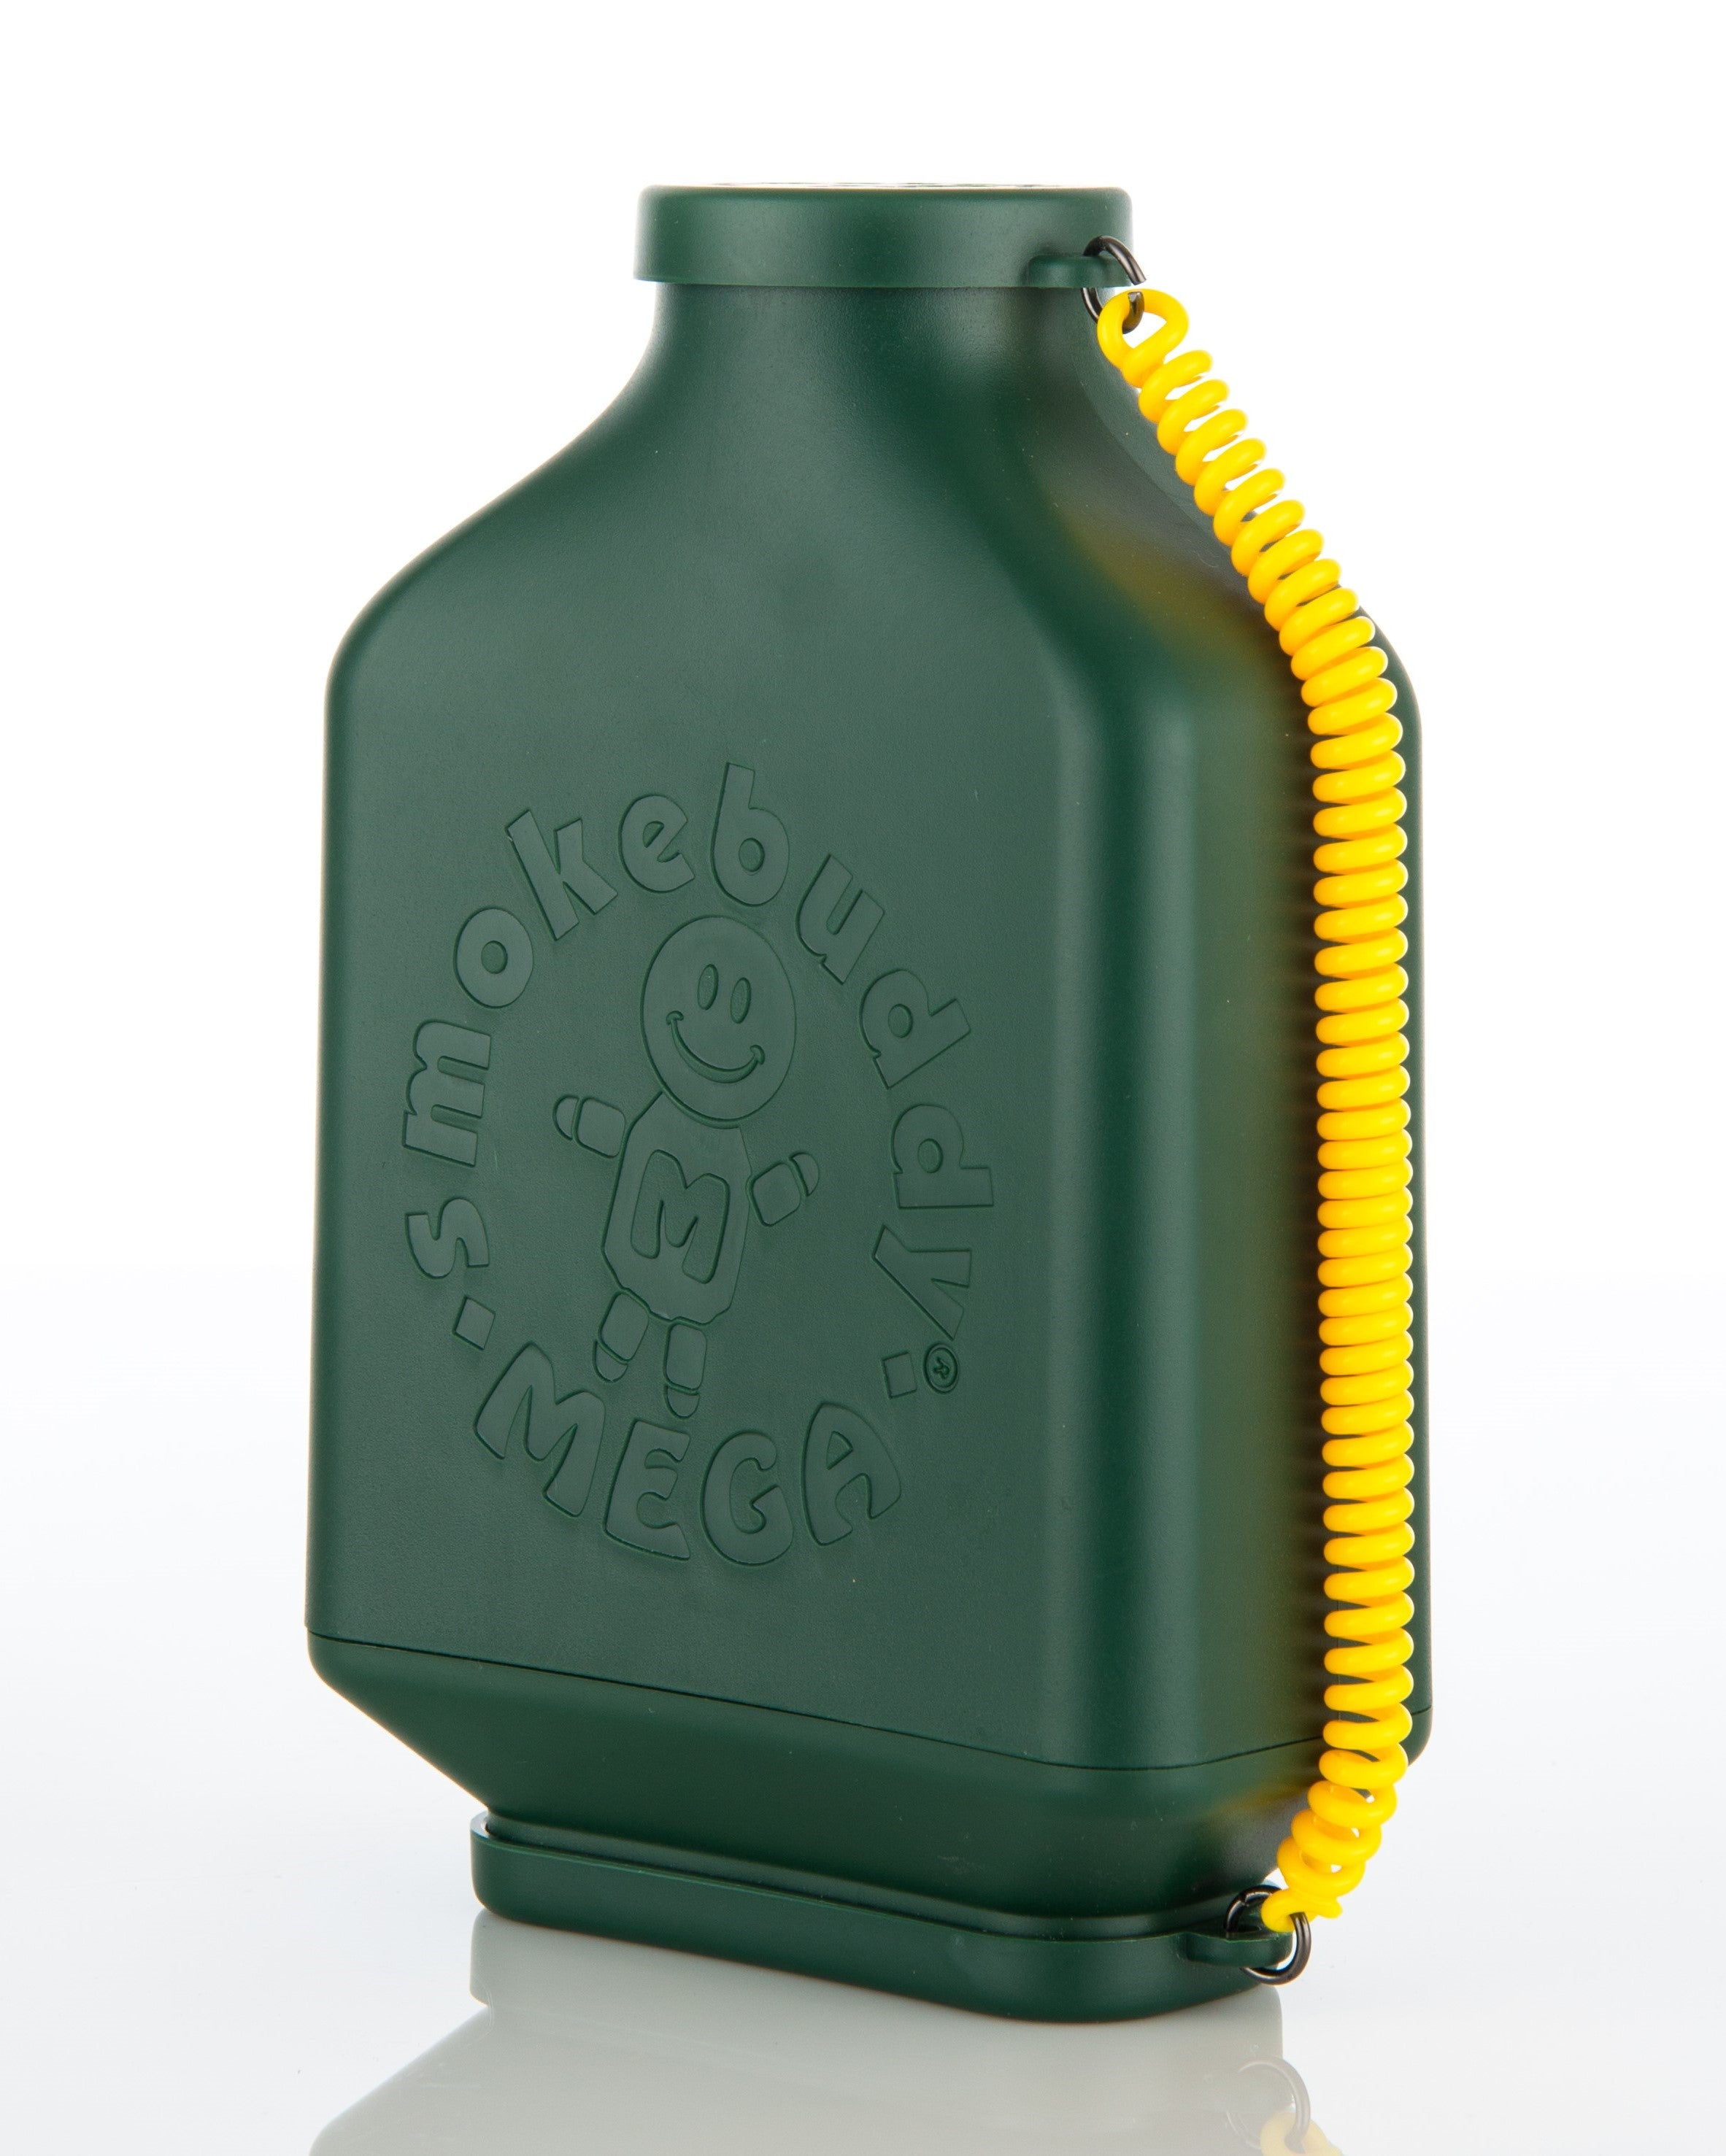 Green Smokebuddy MEGA Personal Air Filter